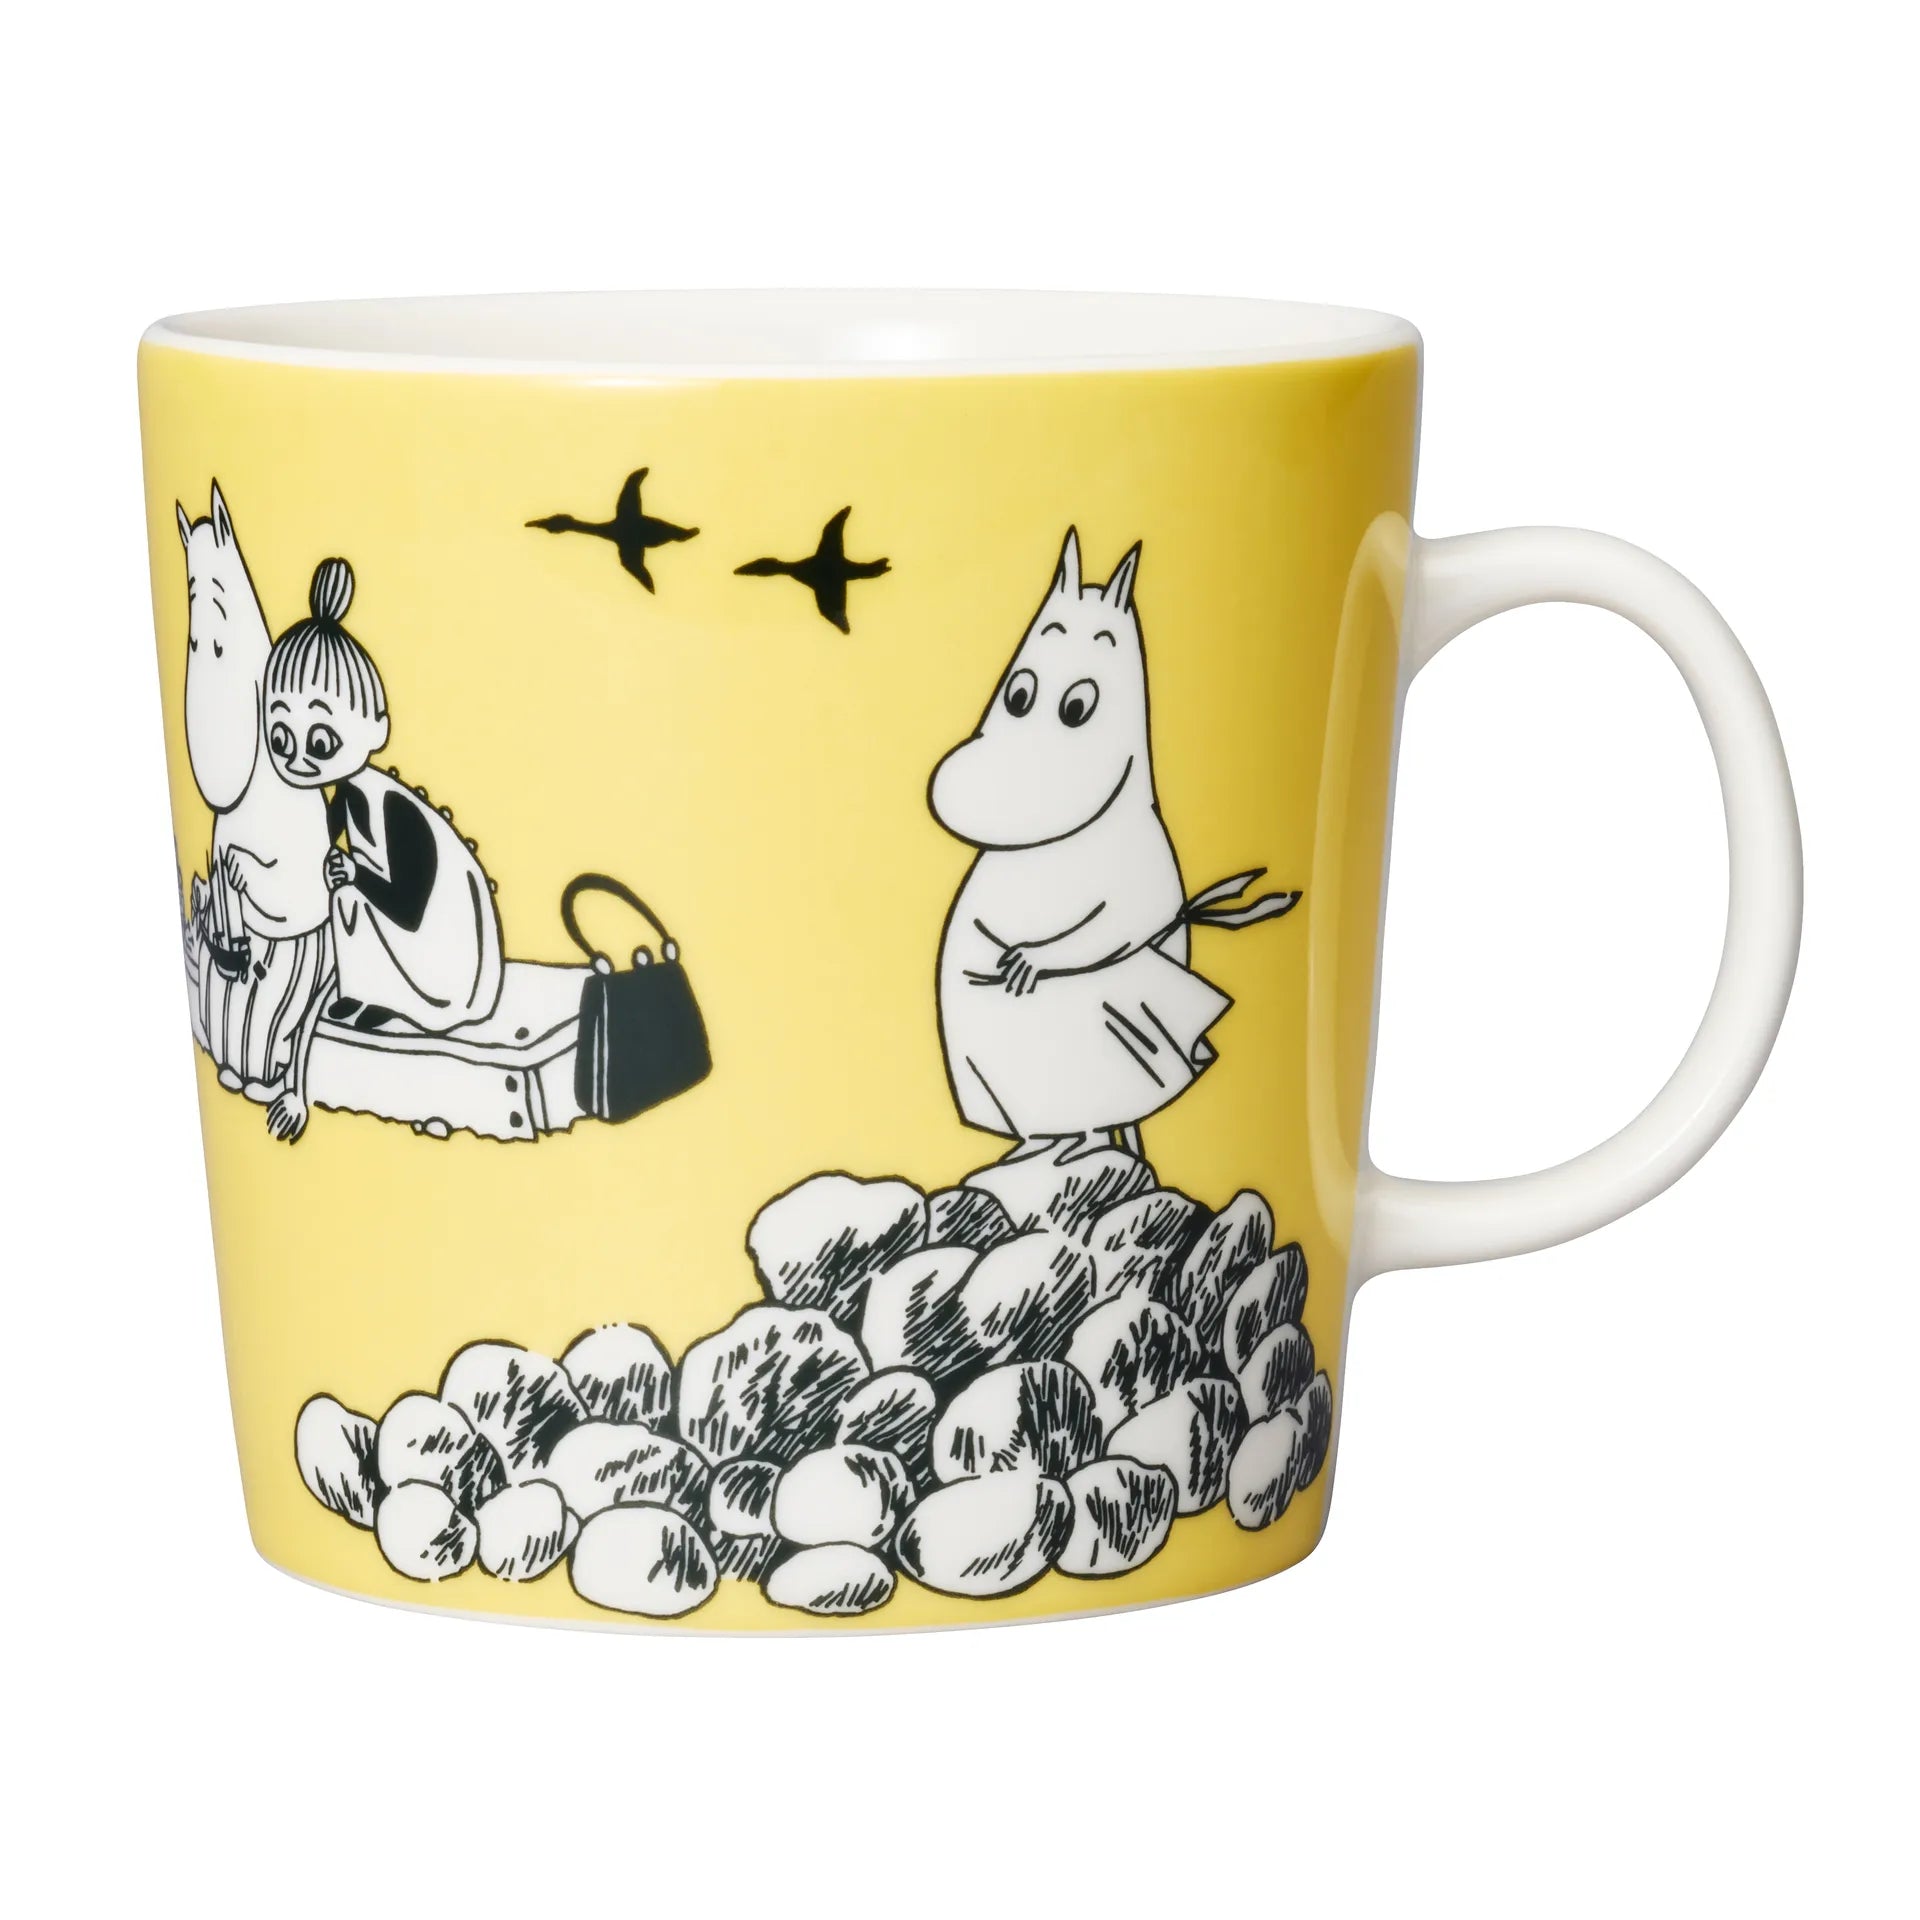 Moomin mug special LARGE 400ml Yellow